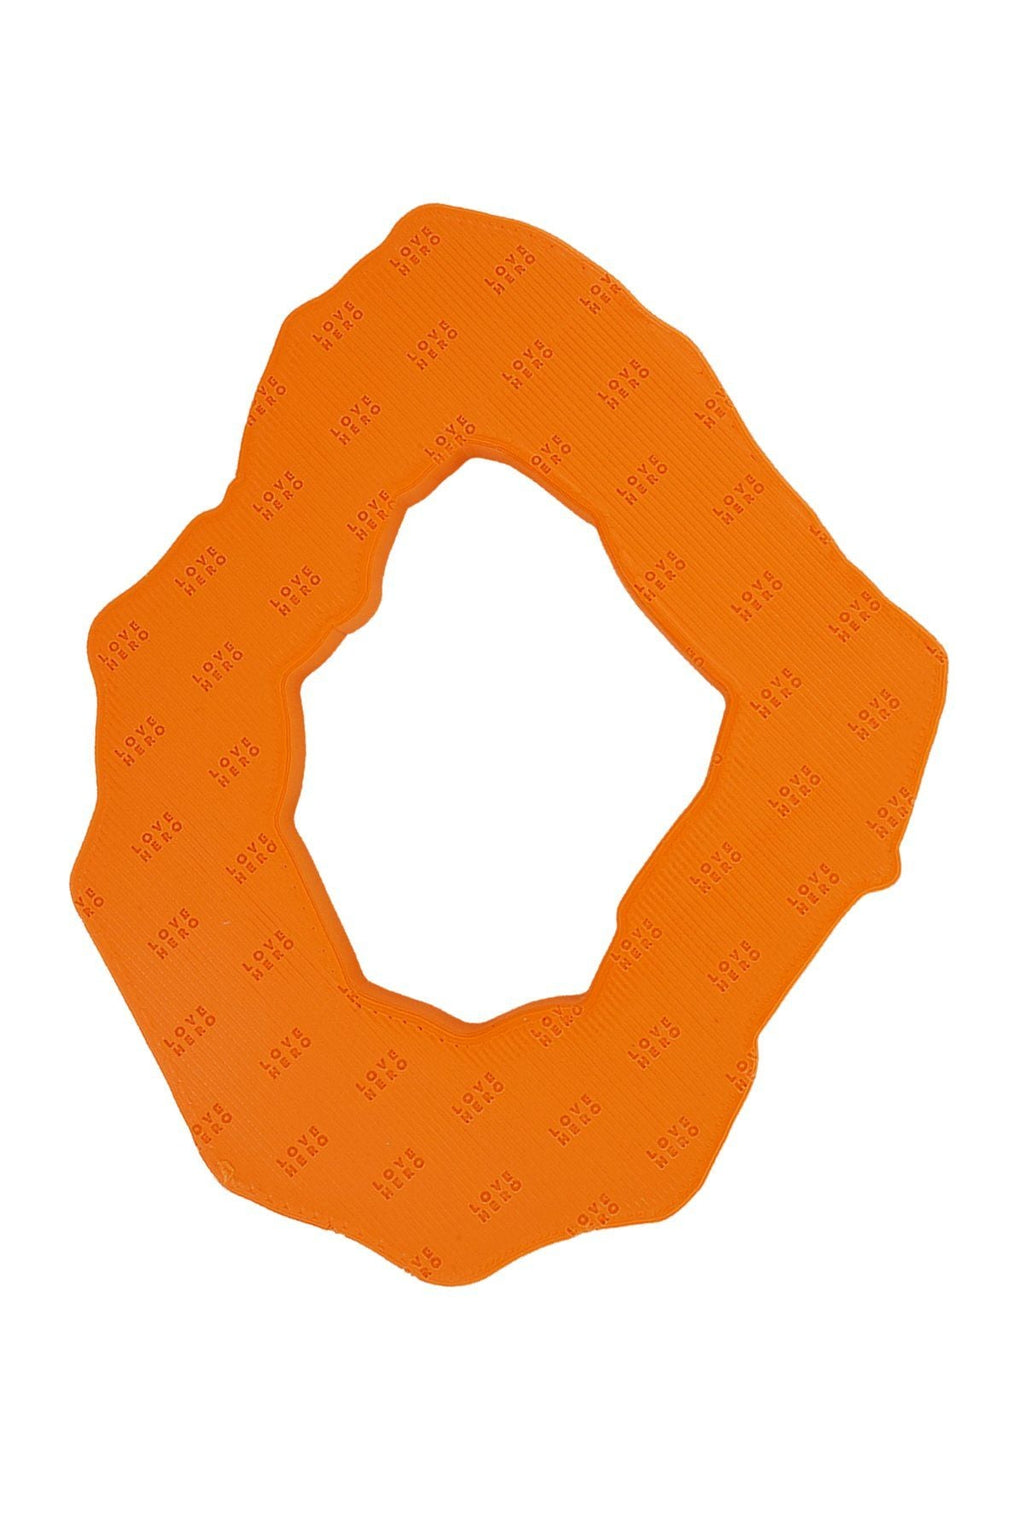 3D Printed Bangle in Orange